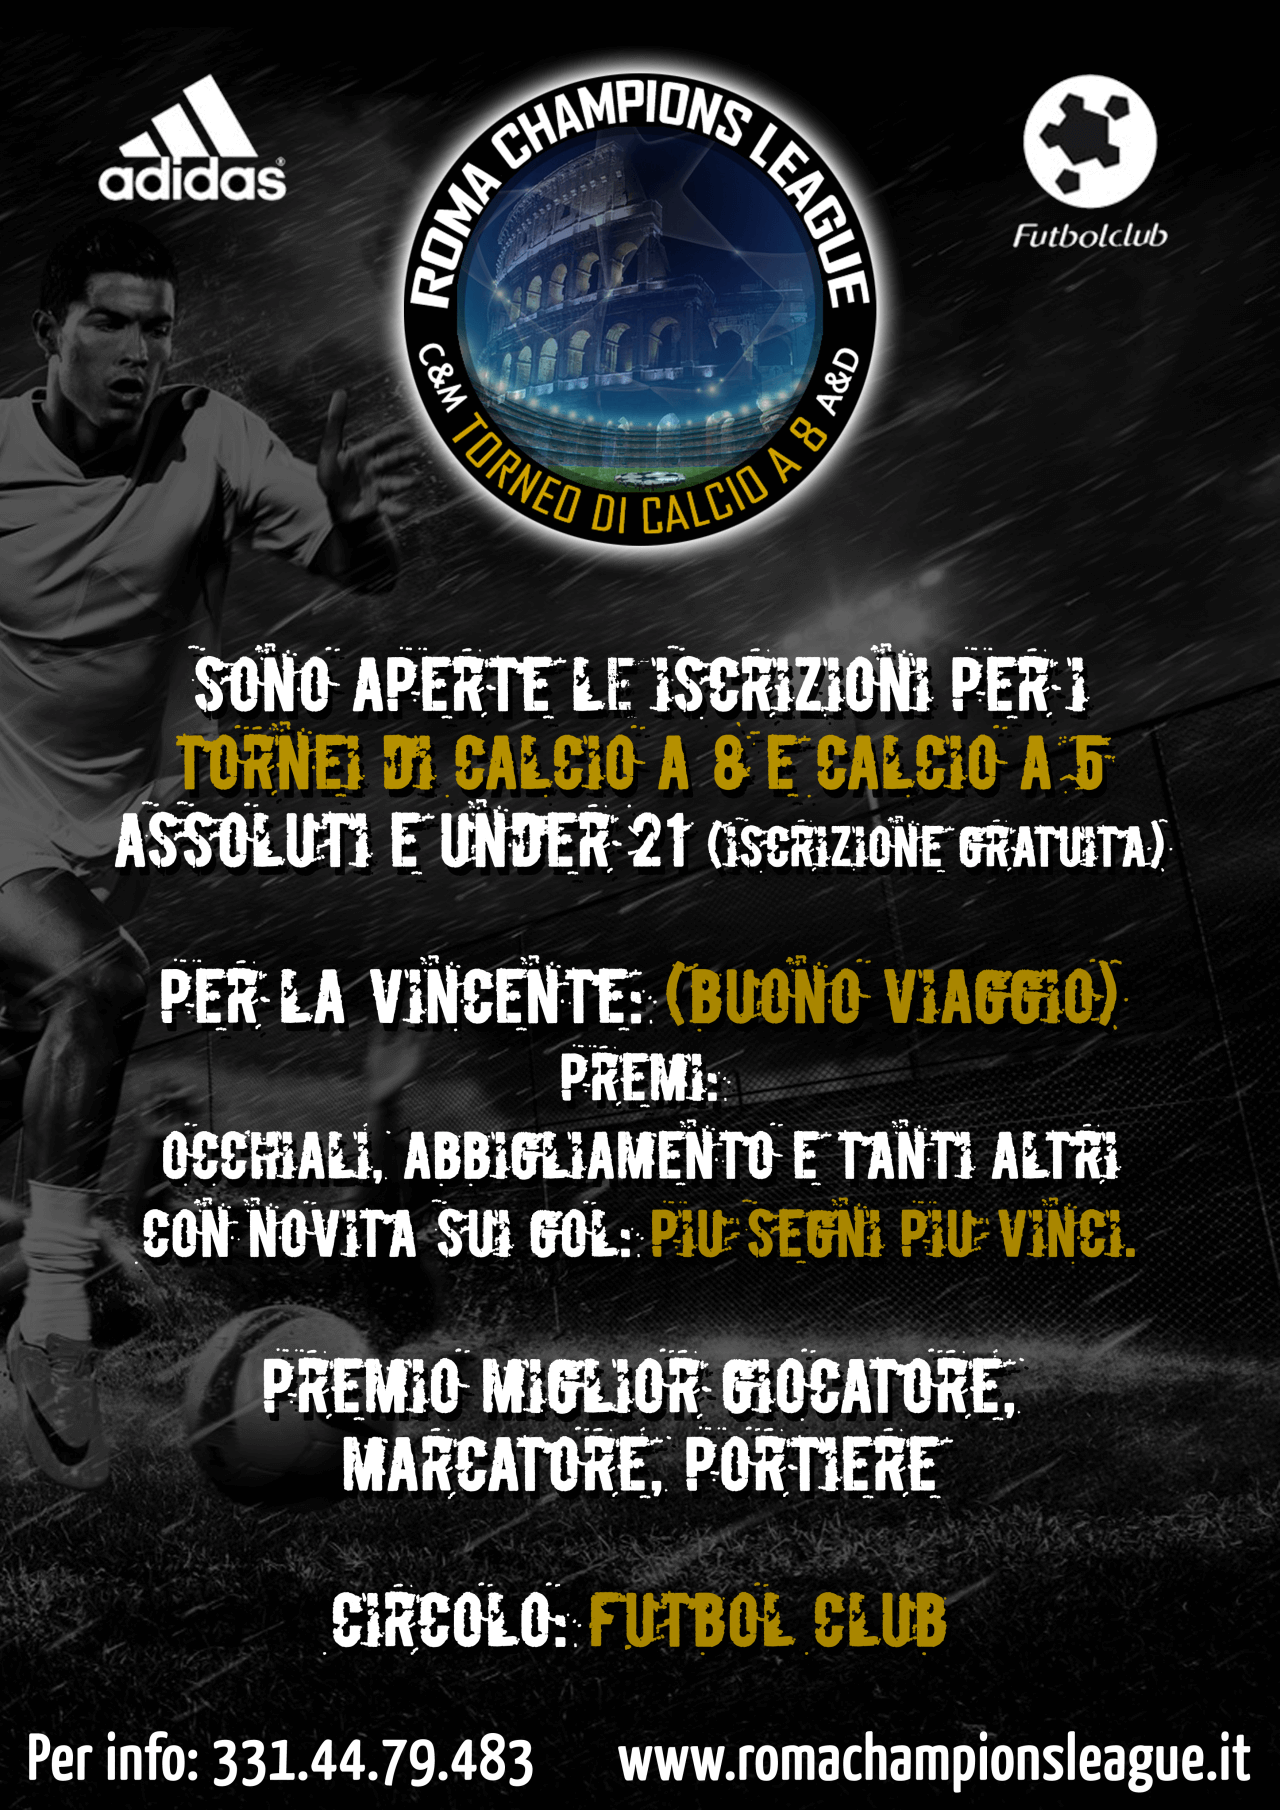 Roma Champions League – Flyer